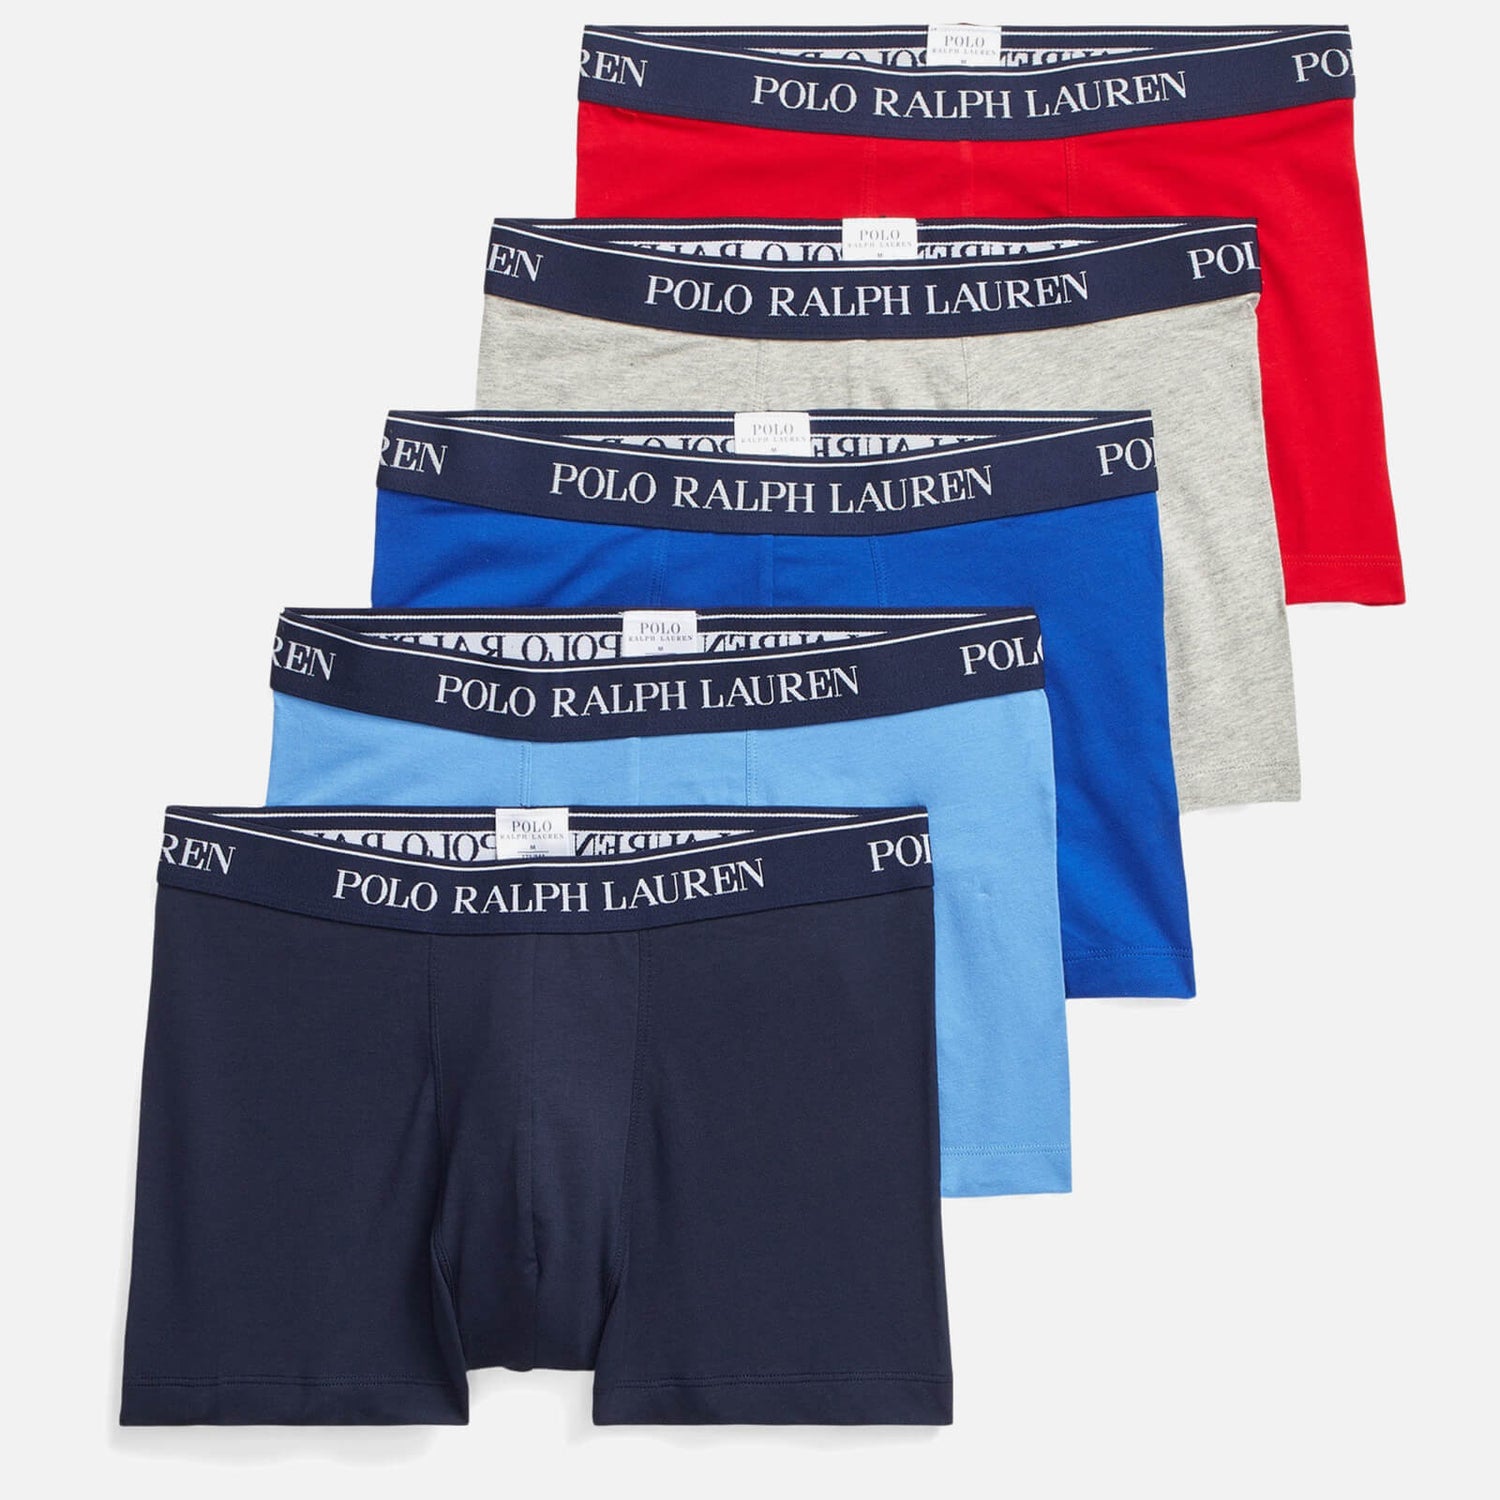 Polo Ralph Lauren Men's Classic 5 Pack Trunks - Red/Grey/Royal/Blue/Navy - S